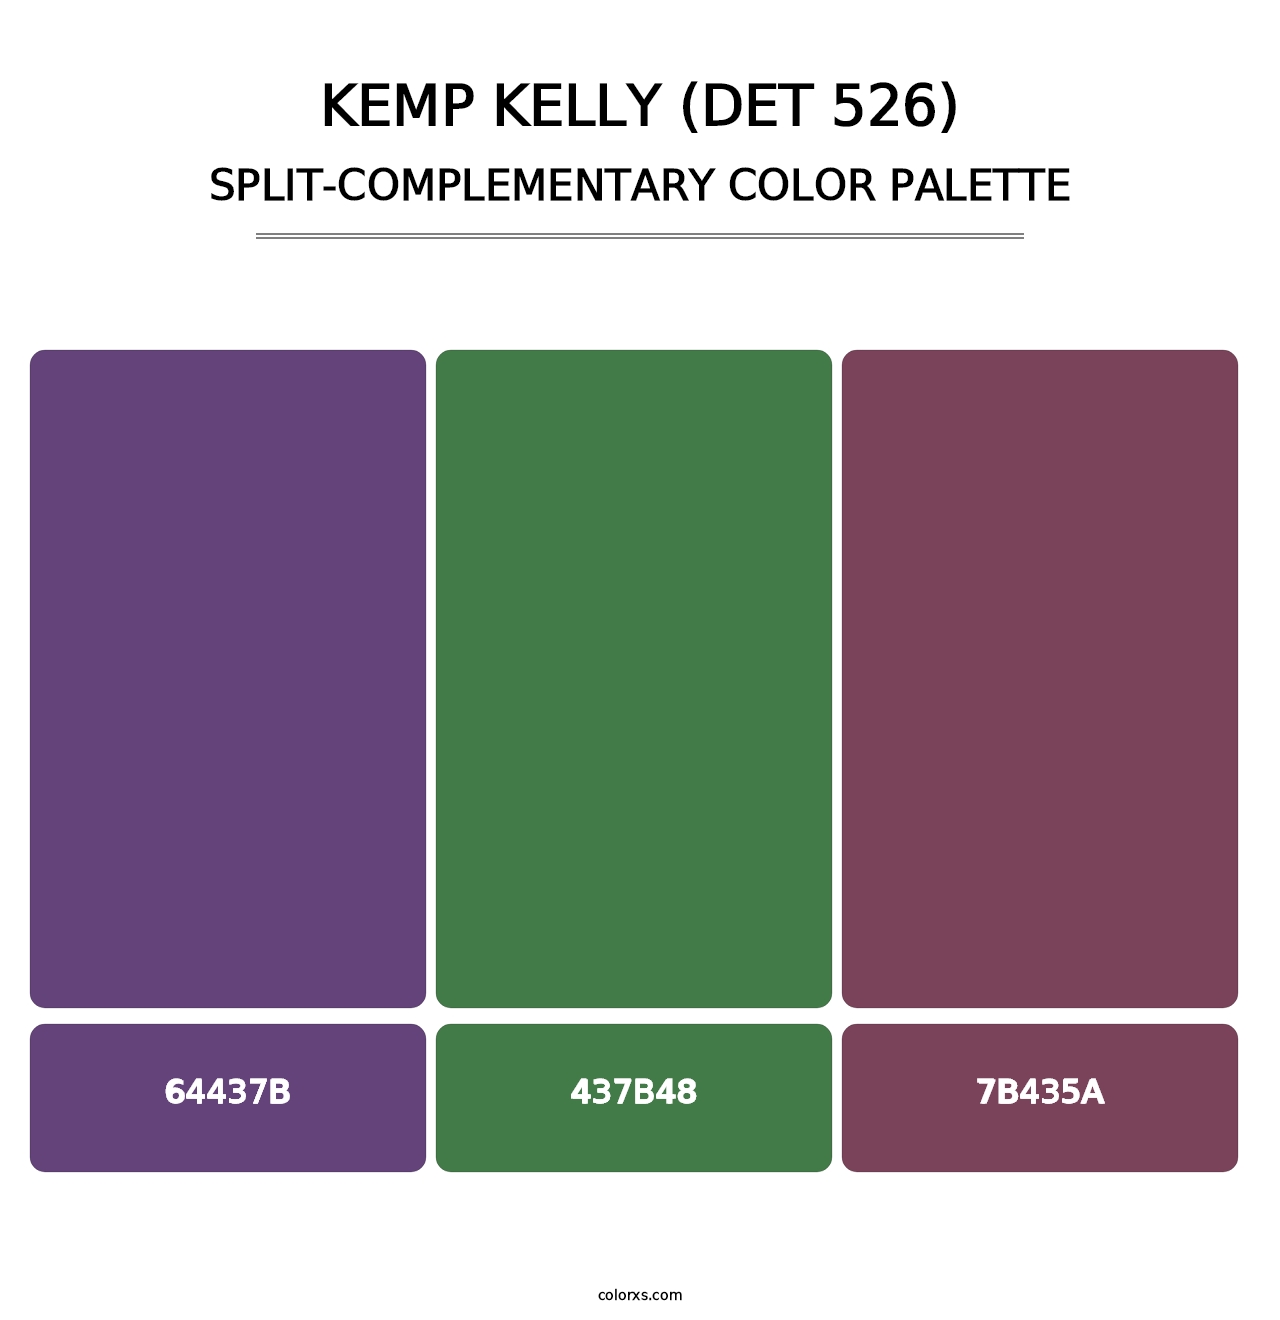 Kemp Kelly (DET 526) - Split-Complementary Color Palette